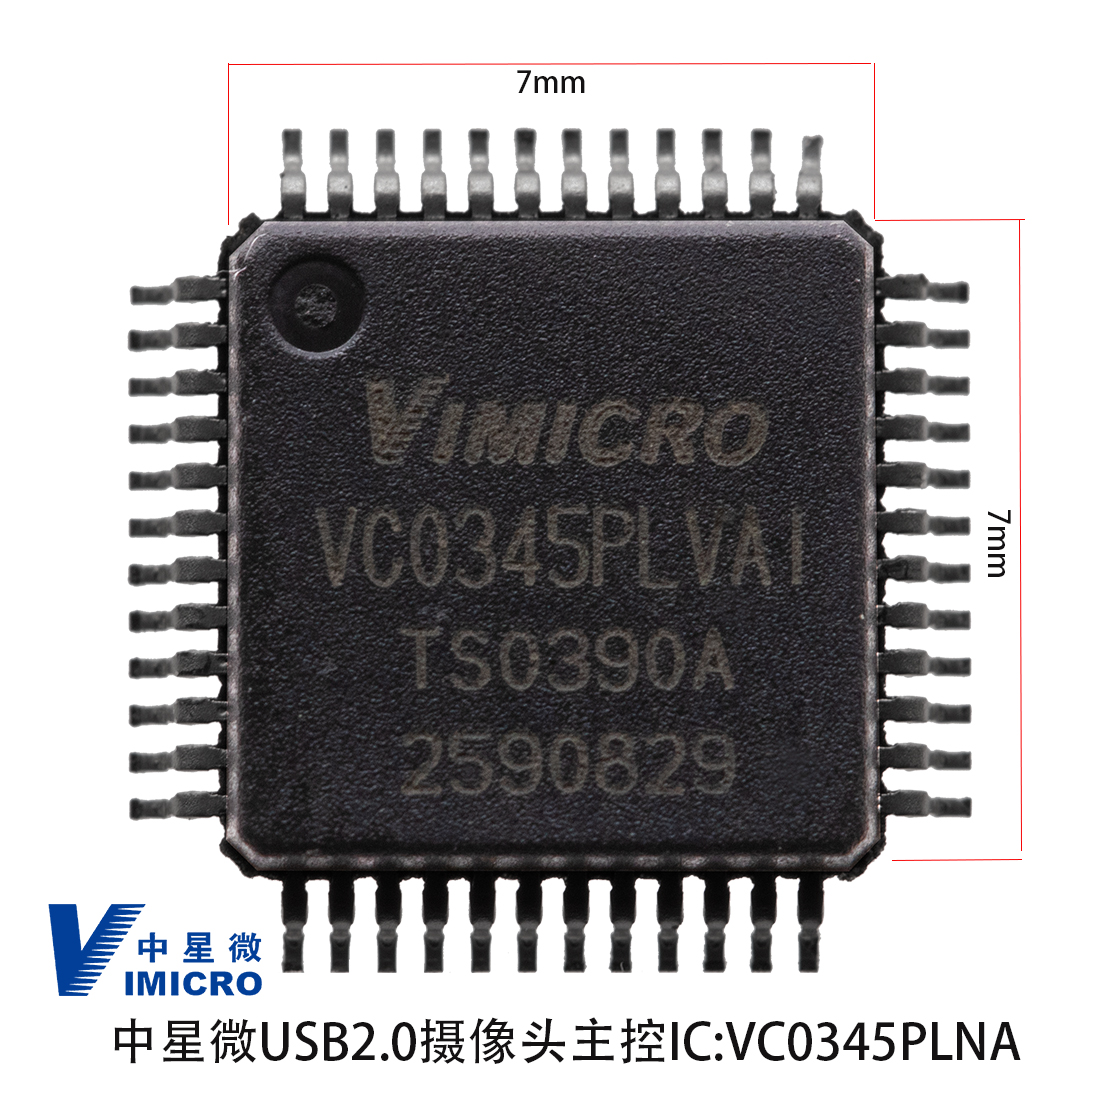 VIMICRO廉价笔记本摄像头主控，VIMICRO低端笔记本摄像头主控，中星微代理商，中星微方案商，中星微主控代理商，中星微电子摄像头主控经销商，中星微官网，VC0345价格，VC0345 datasheet，VC0345文档下载，VC0345原装现货，VC0345现货库存，VC0345芯片，VC0345图片，VC0345规格书，VC0345代理商，VC0345技术支持，VC0345产品介绍，VC0345参数，VC0345方案商，VC0345分销商，VC0345经销商，VC0345官网，VC0345生产厂家，VC0345专卖店，VC0345高价收购，VC0345模组，VC0345模块，VC0345特价，VC0345库存，VC0345生产商，VC0345哪里买，VC0345性价比，VC0345PLNA规格书，VC0345PLVAI现货库存，VC0345PLVAI简介